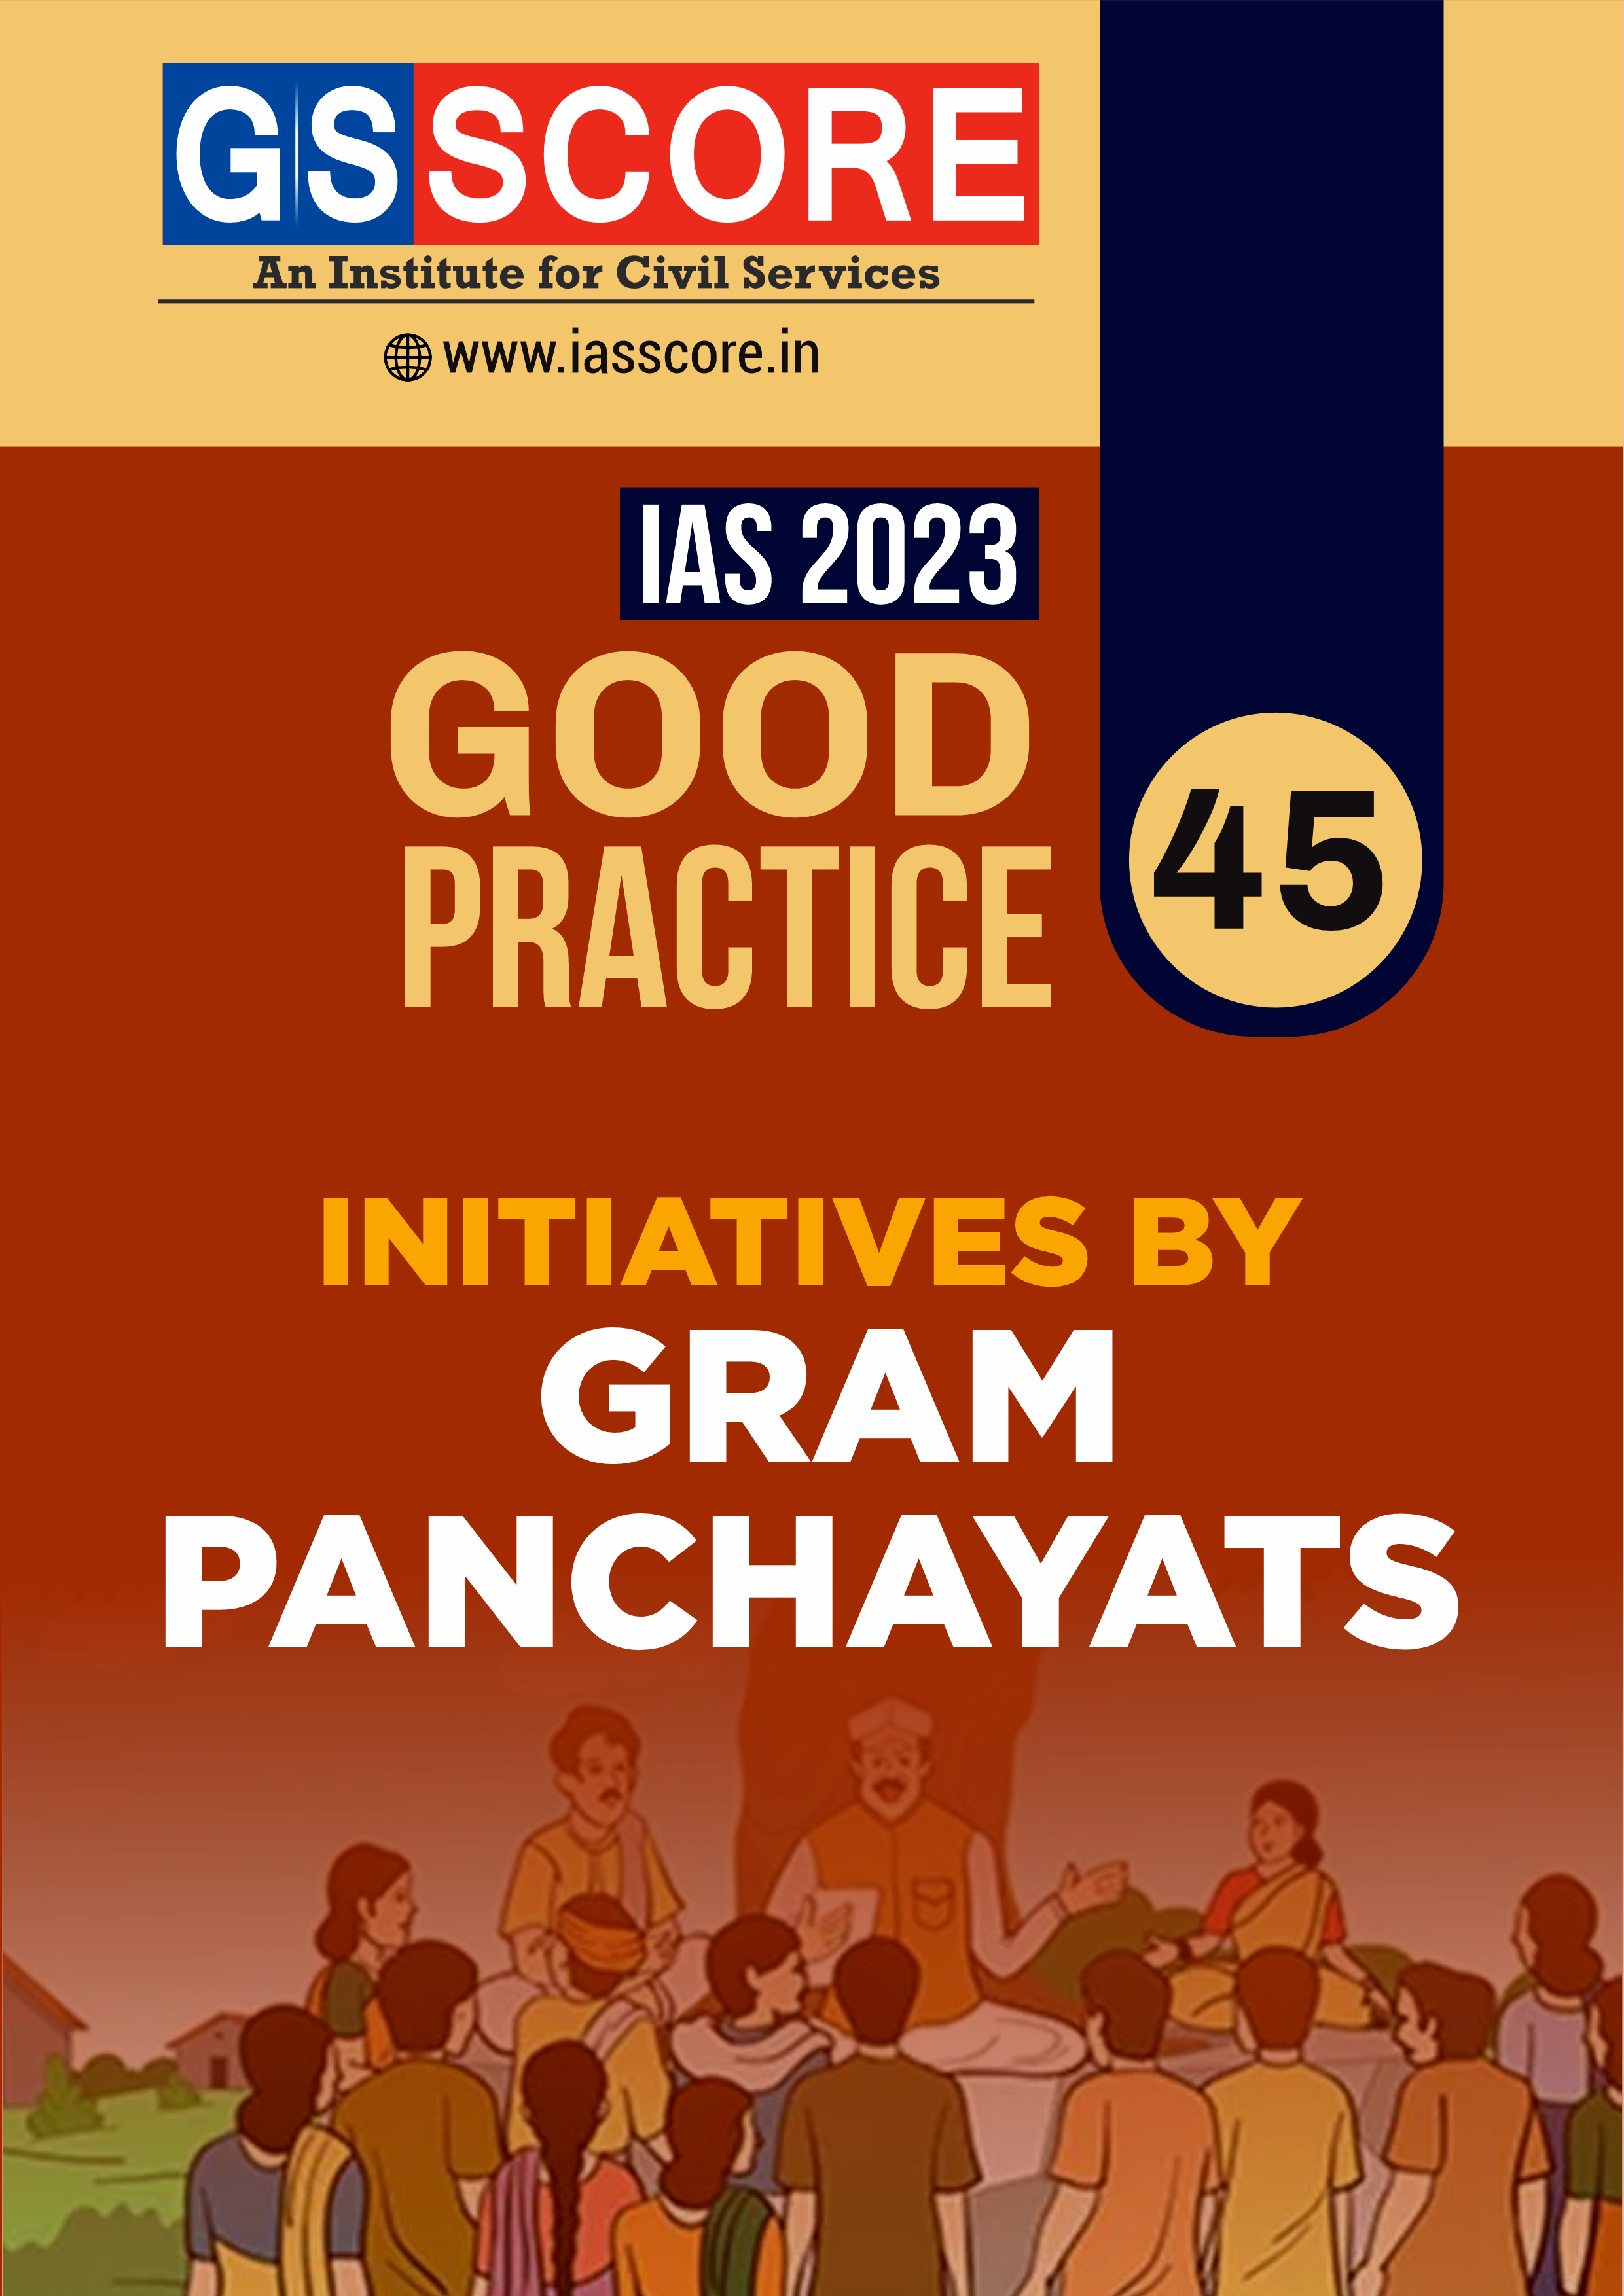 Good Practice -Gram Panchayat